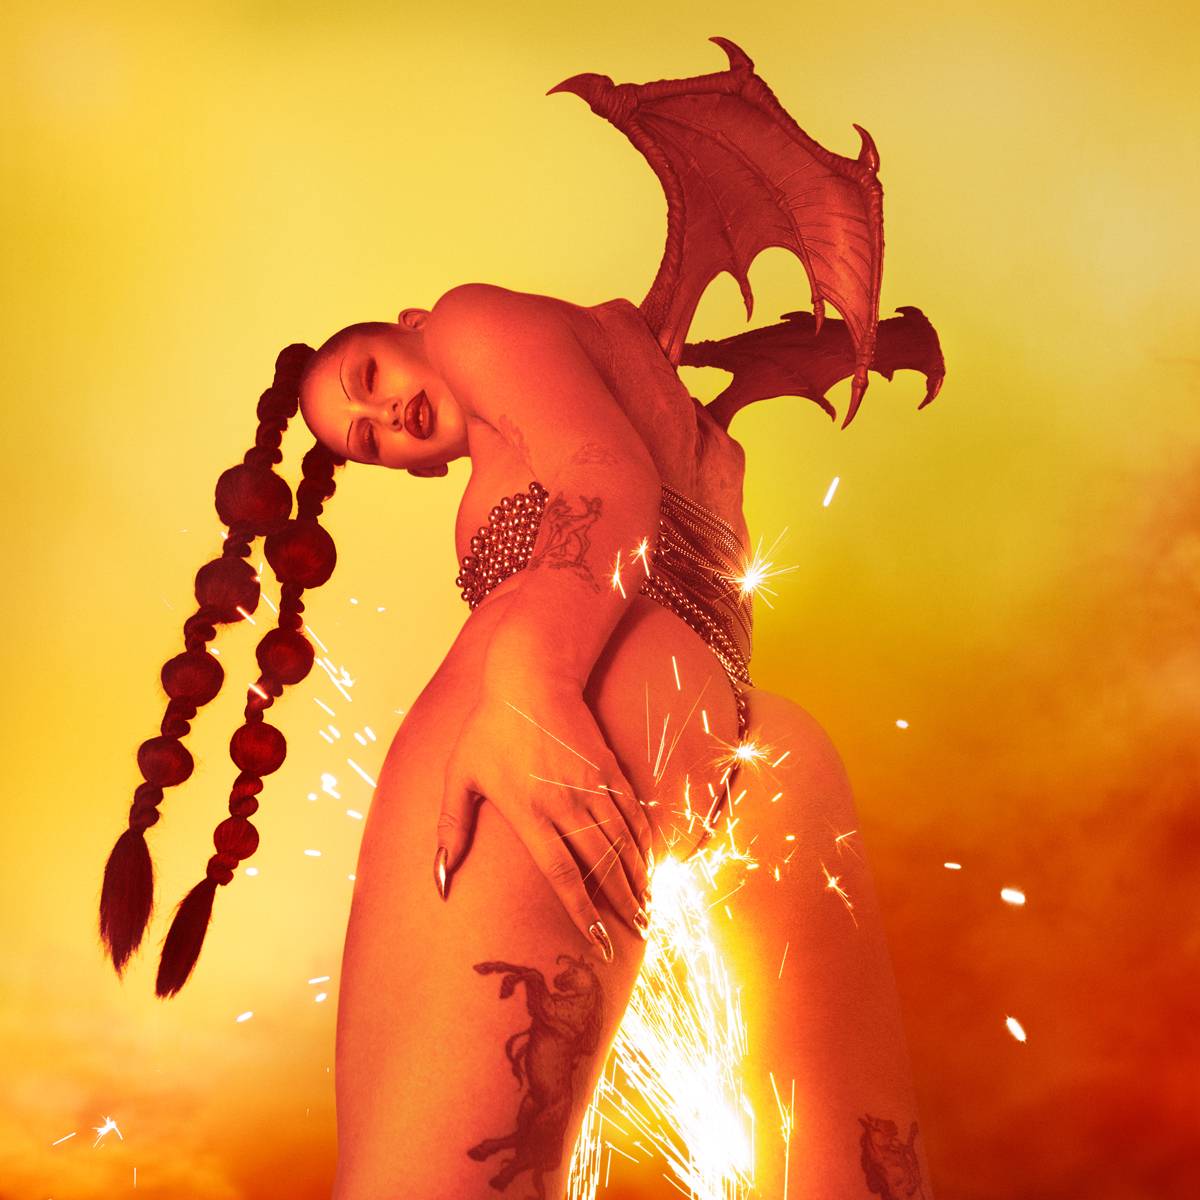 Eartheater, “Phoenix : Flames are Dew upon my Skin” (2020). Photo : Daniel Sannwald